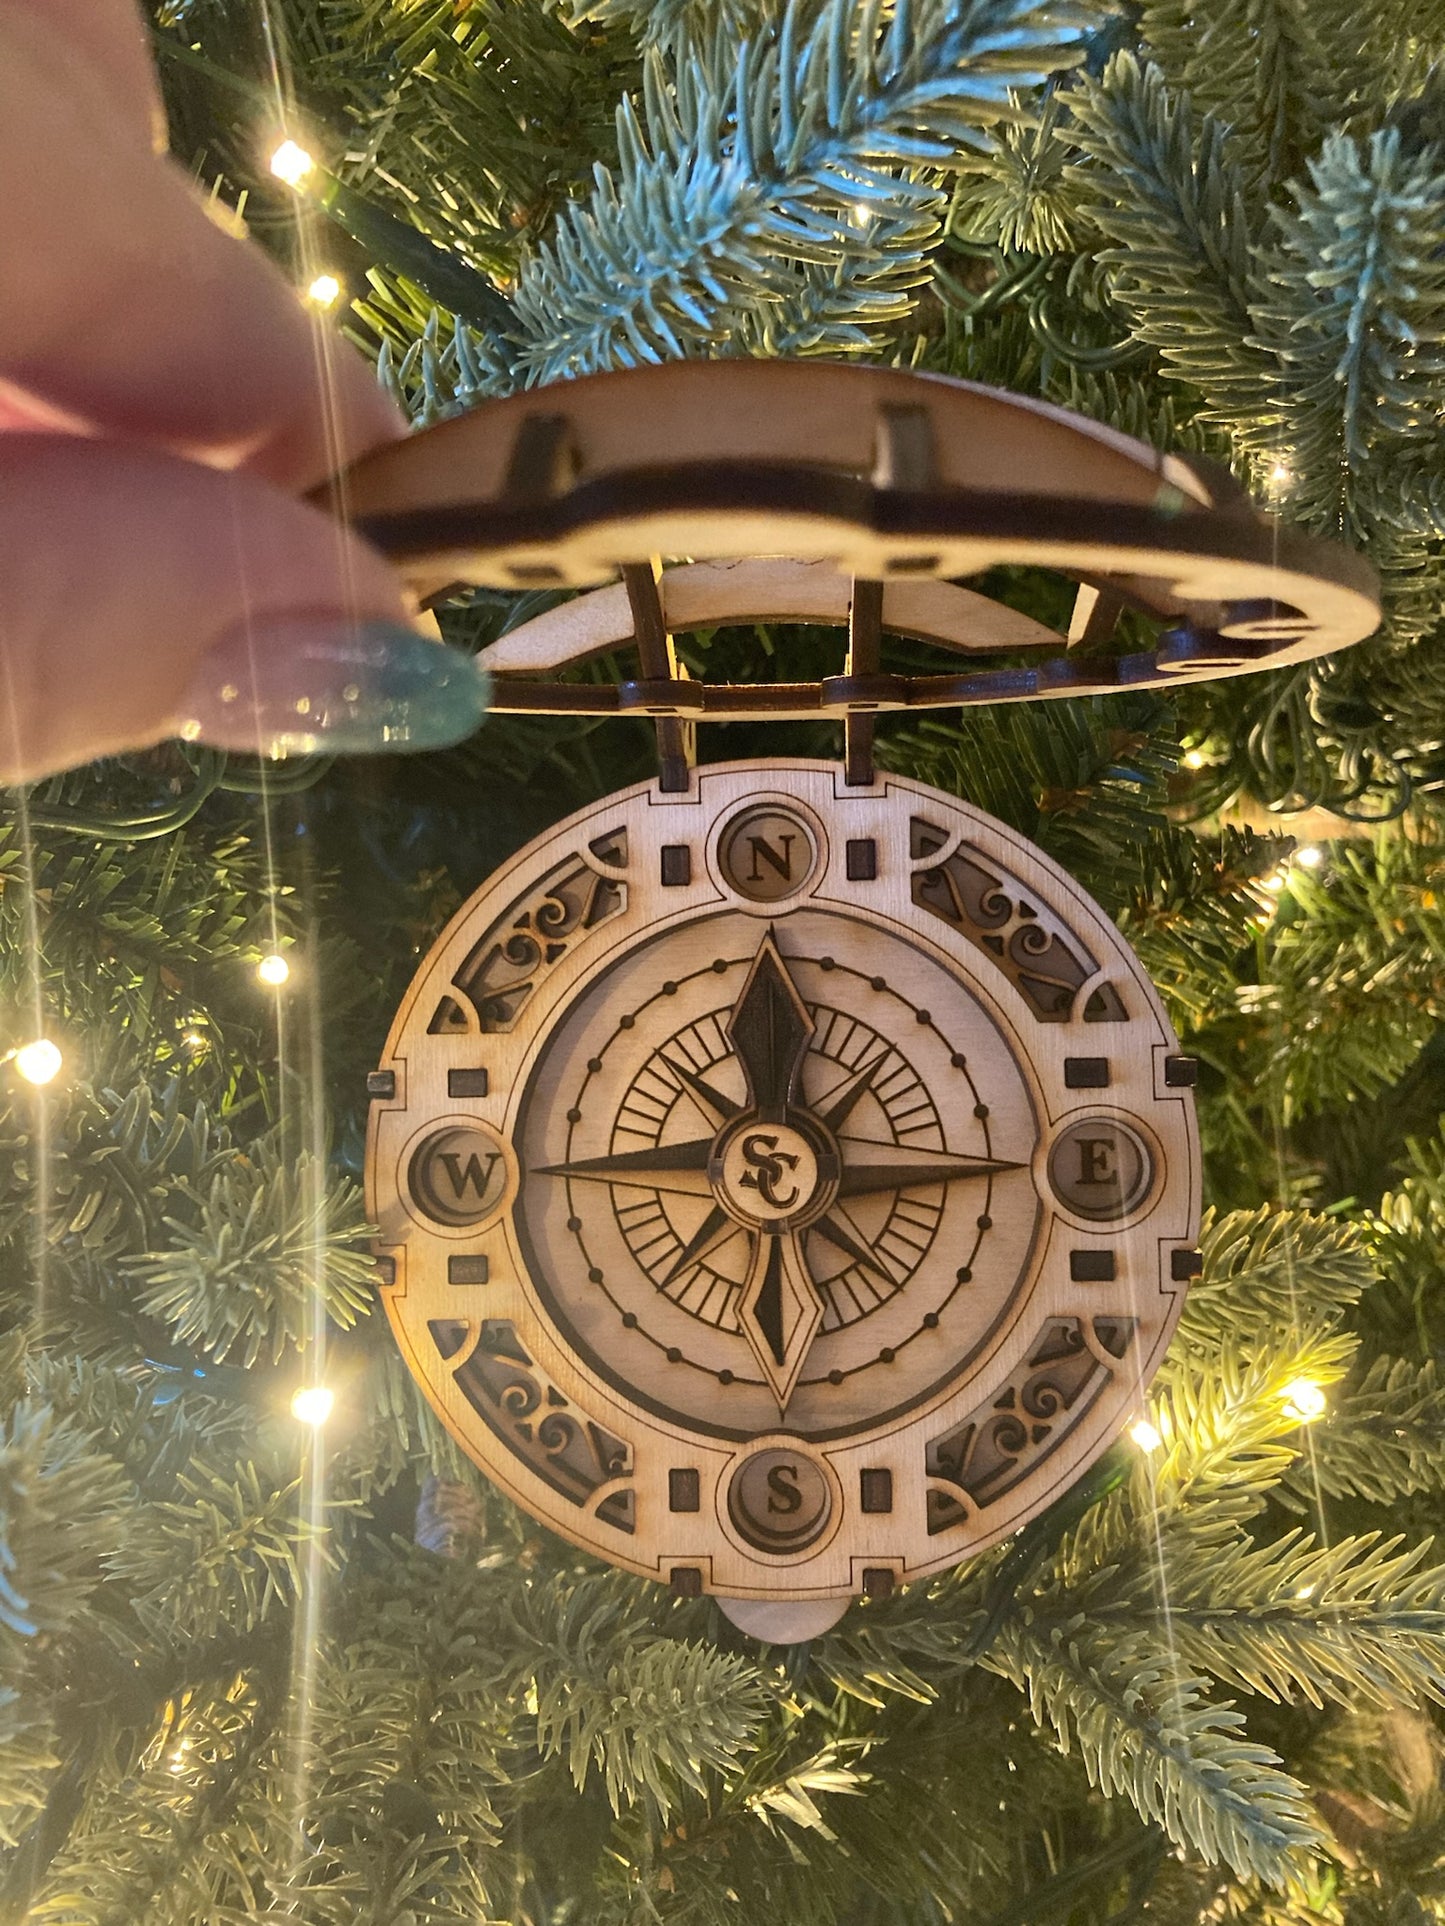 Santa’s Compass with QR Code to “track” Santa